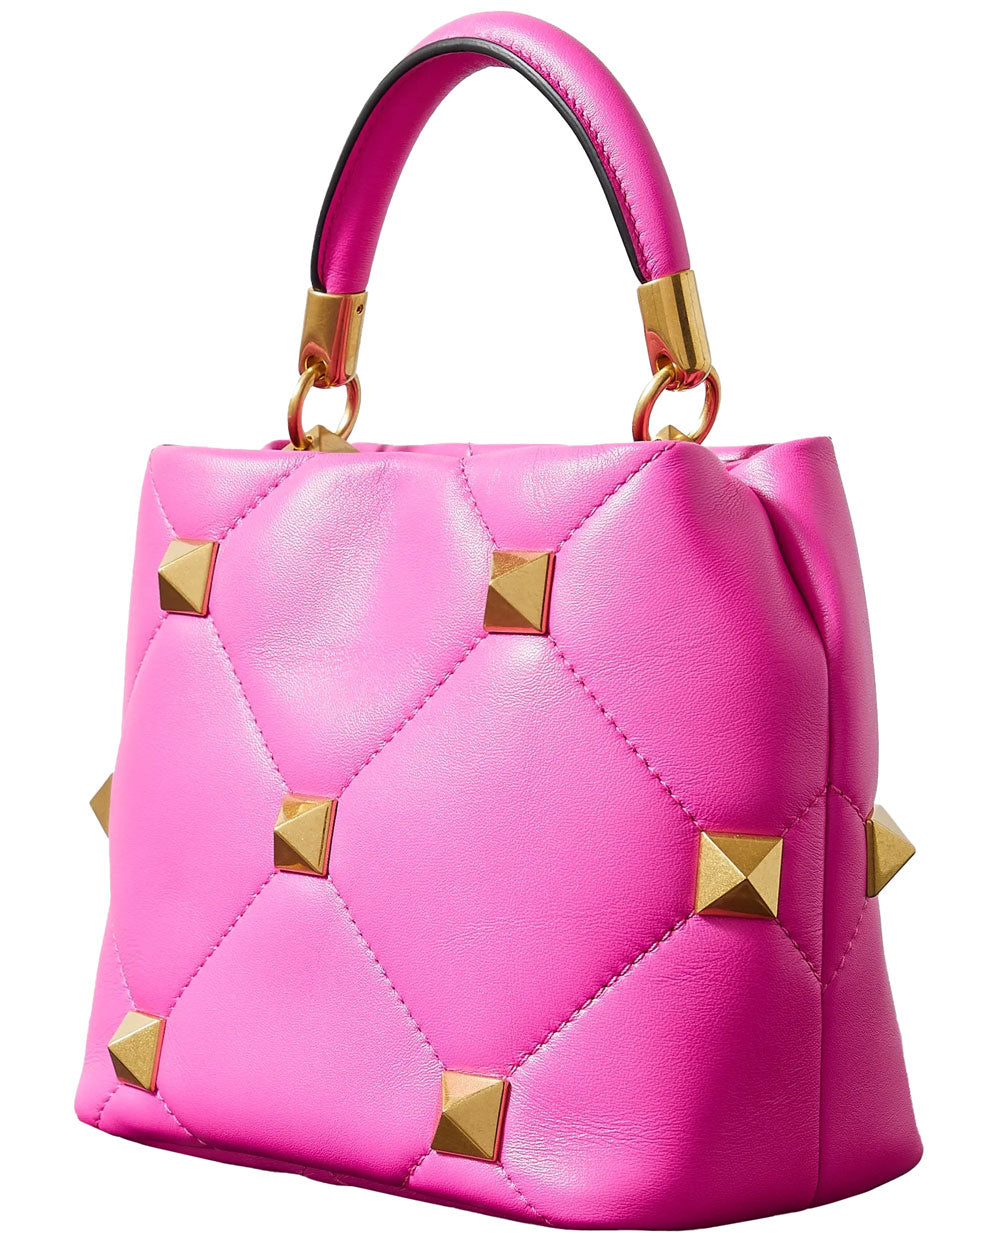 Valentino Garavani Women's Small Rockstud Leather Top Handle Bag - Flamingo Pink